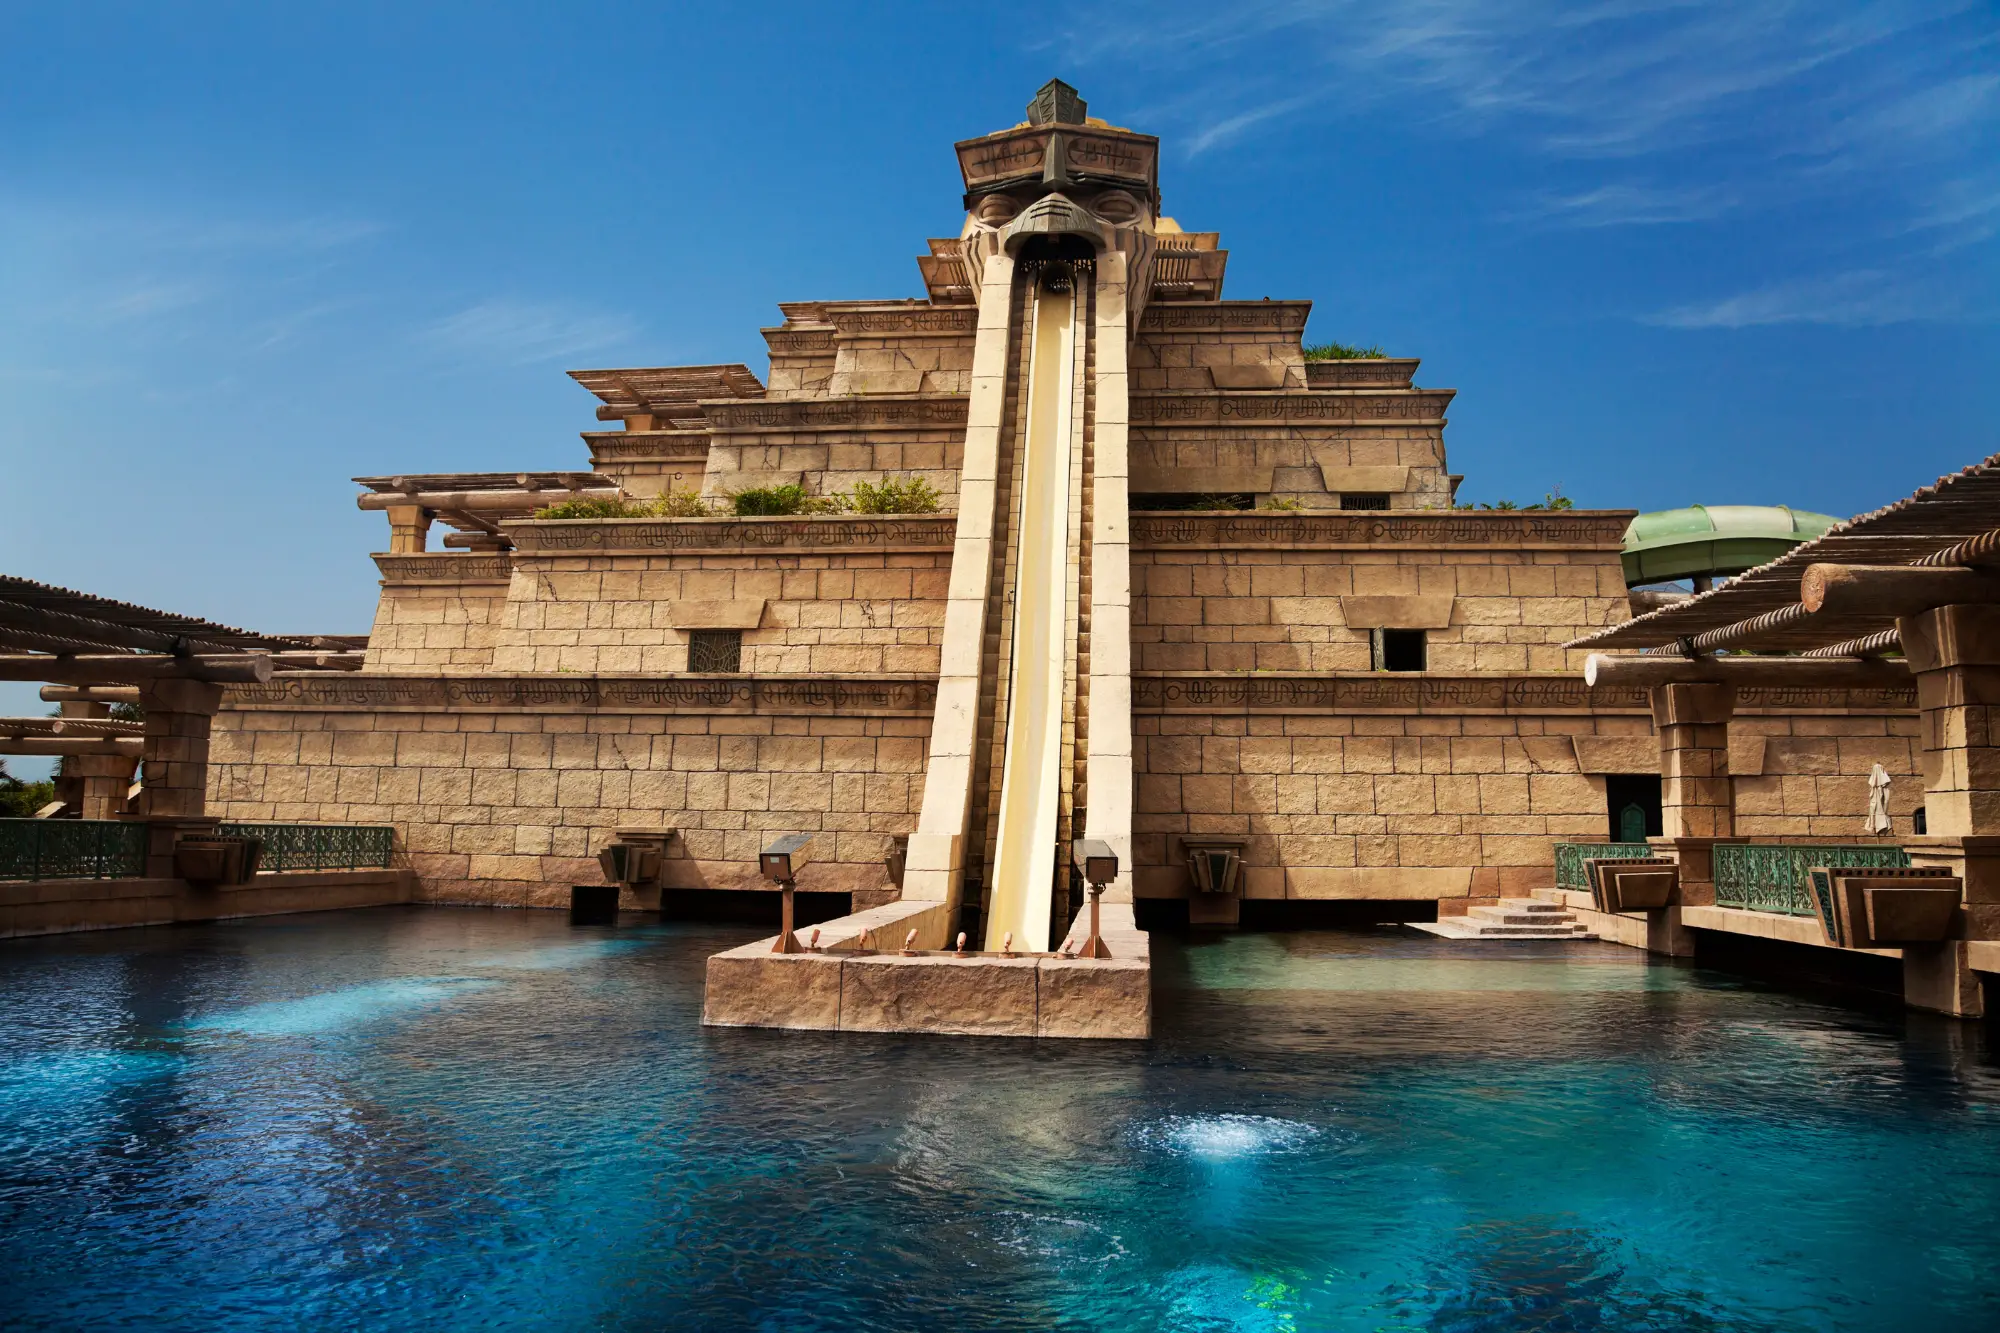 Aquaventure Waterpark at Atlantis The Palm